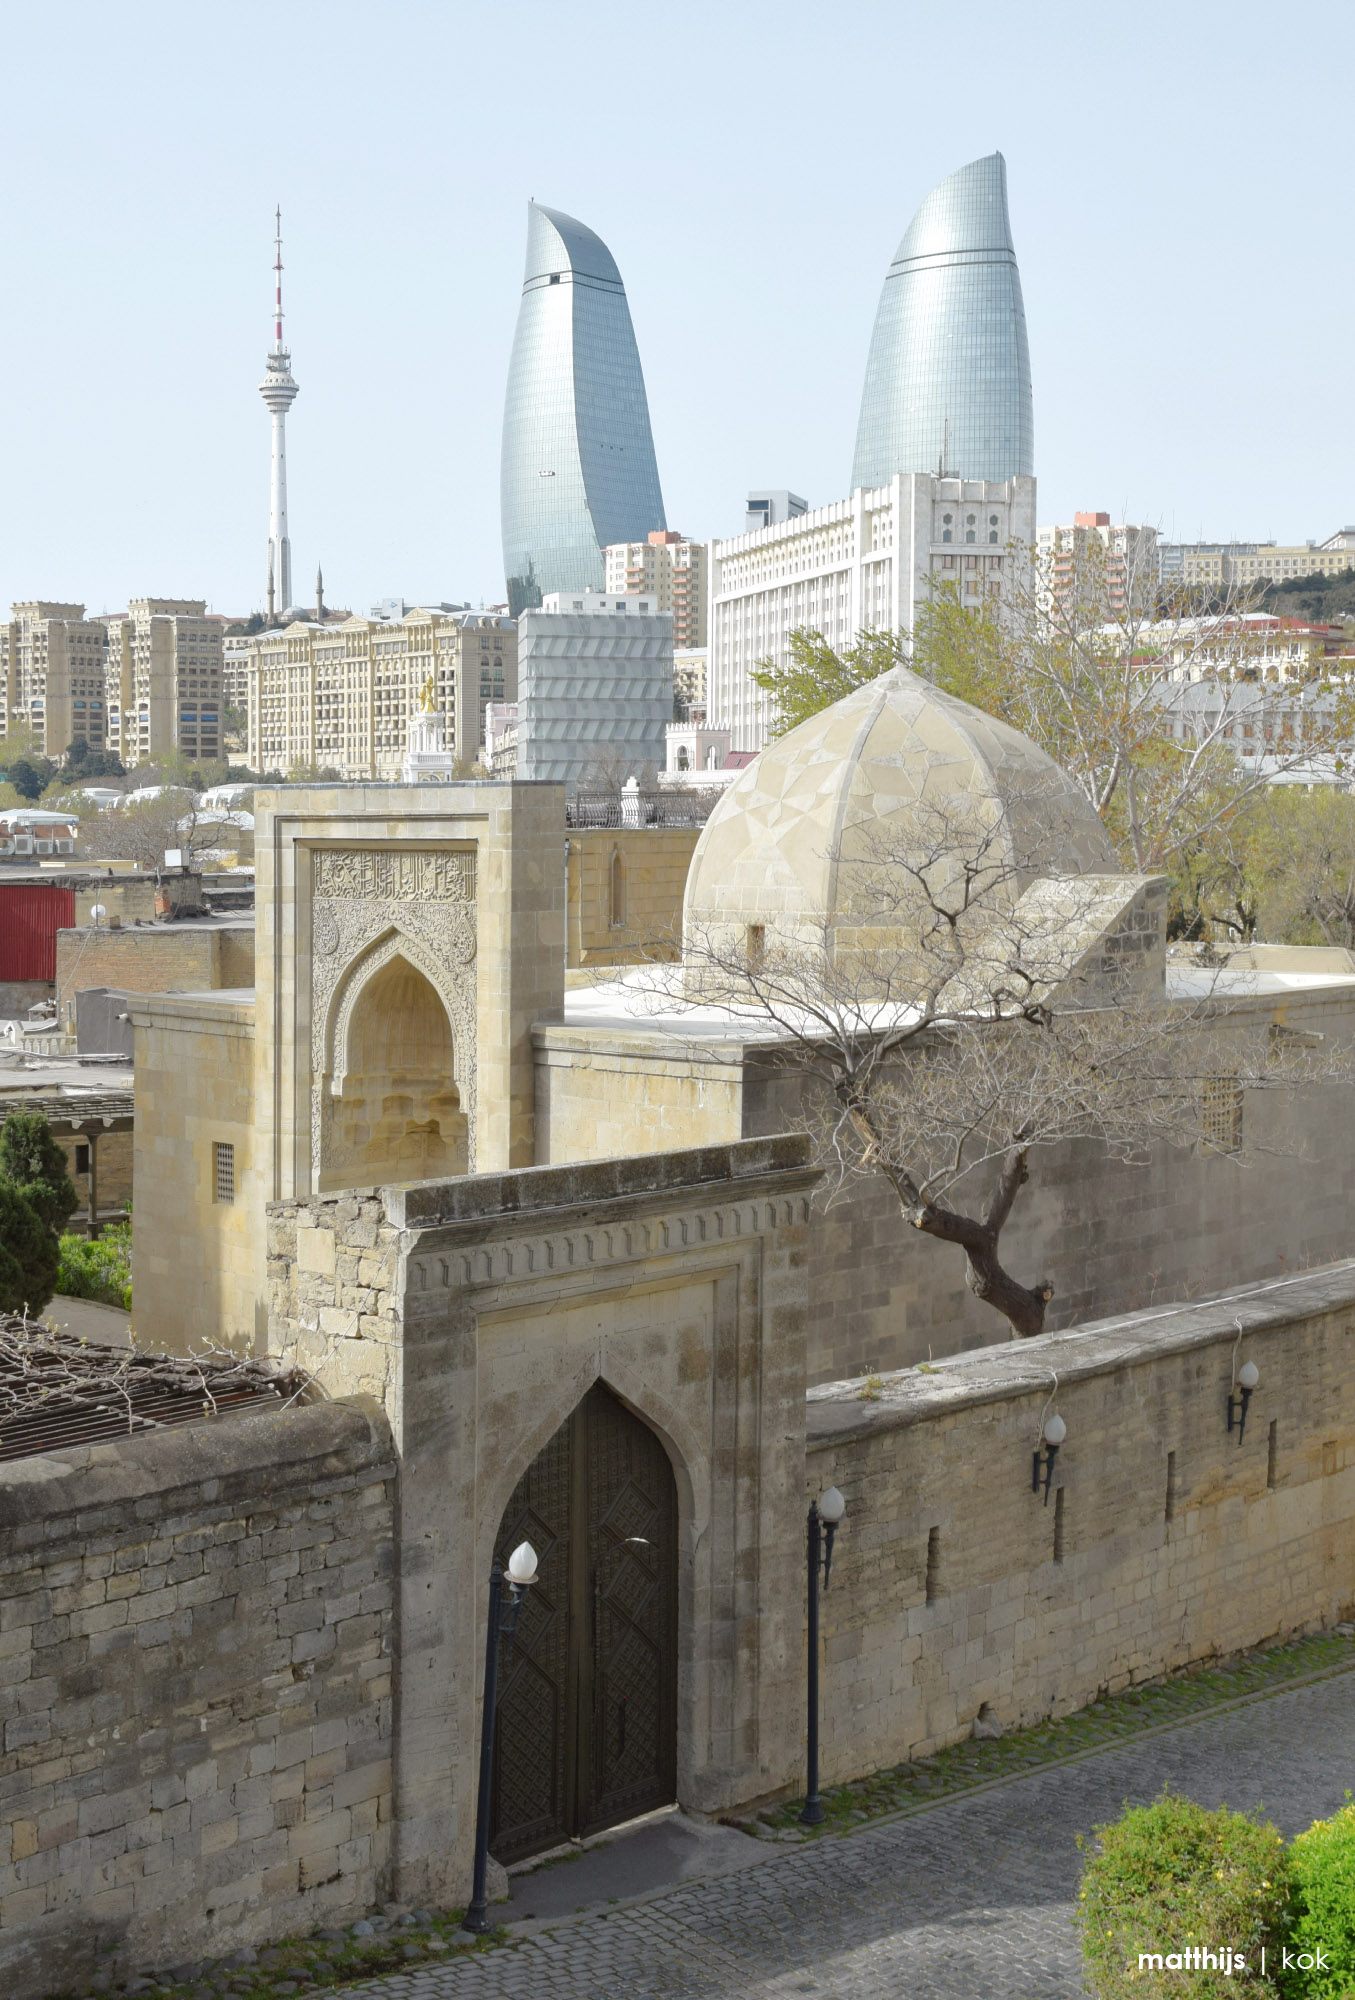 Şirvanşahlar Sarayı, Baku, Azerbaijan | Photo by Matthijs Kok